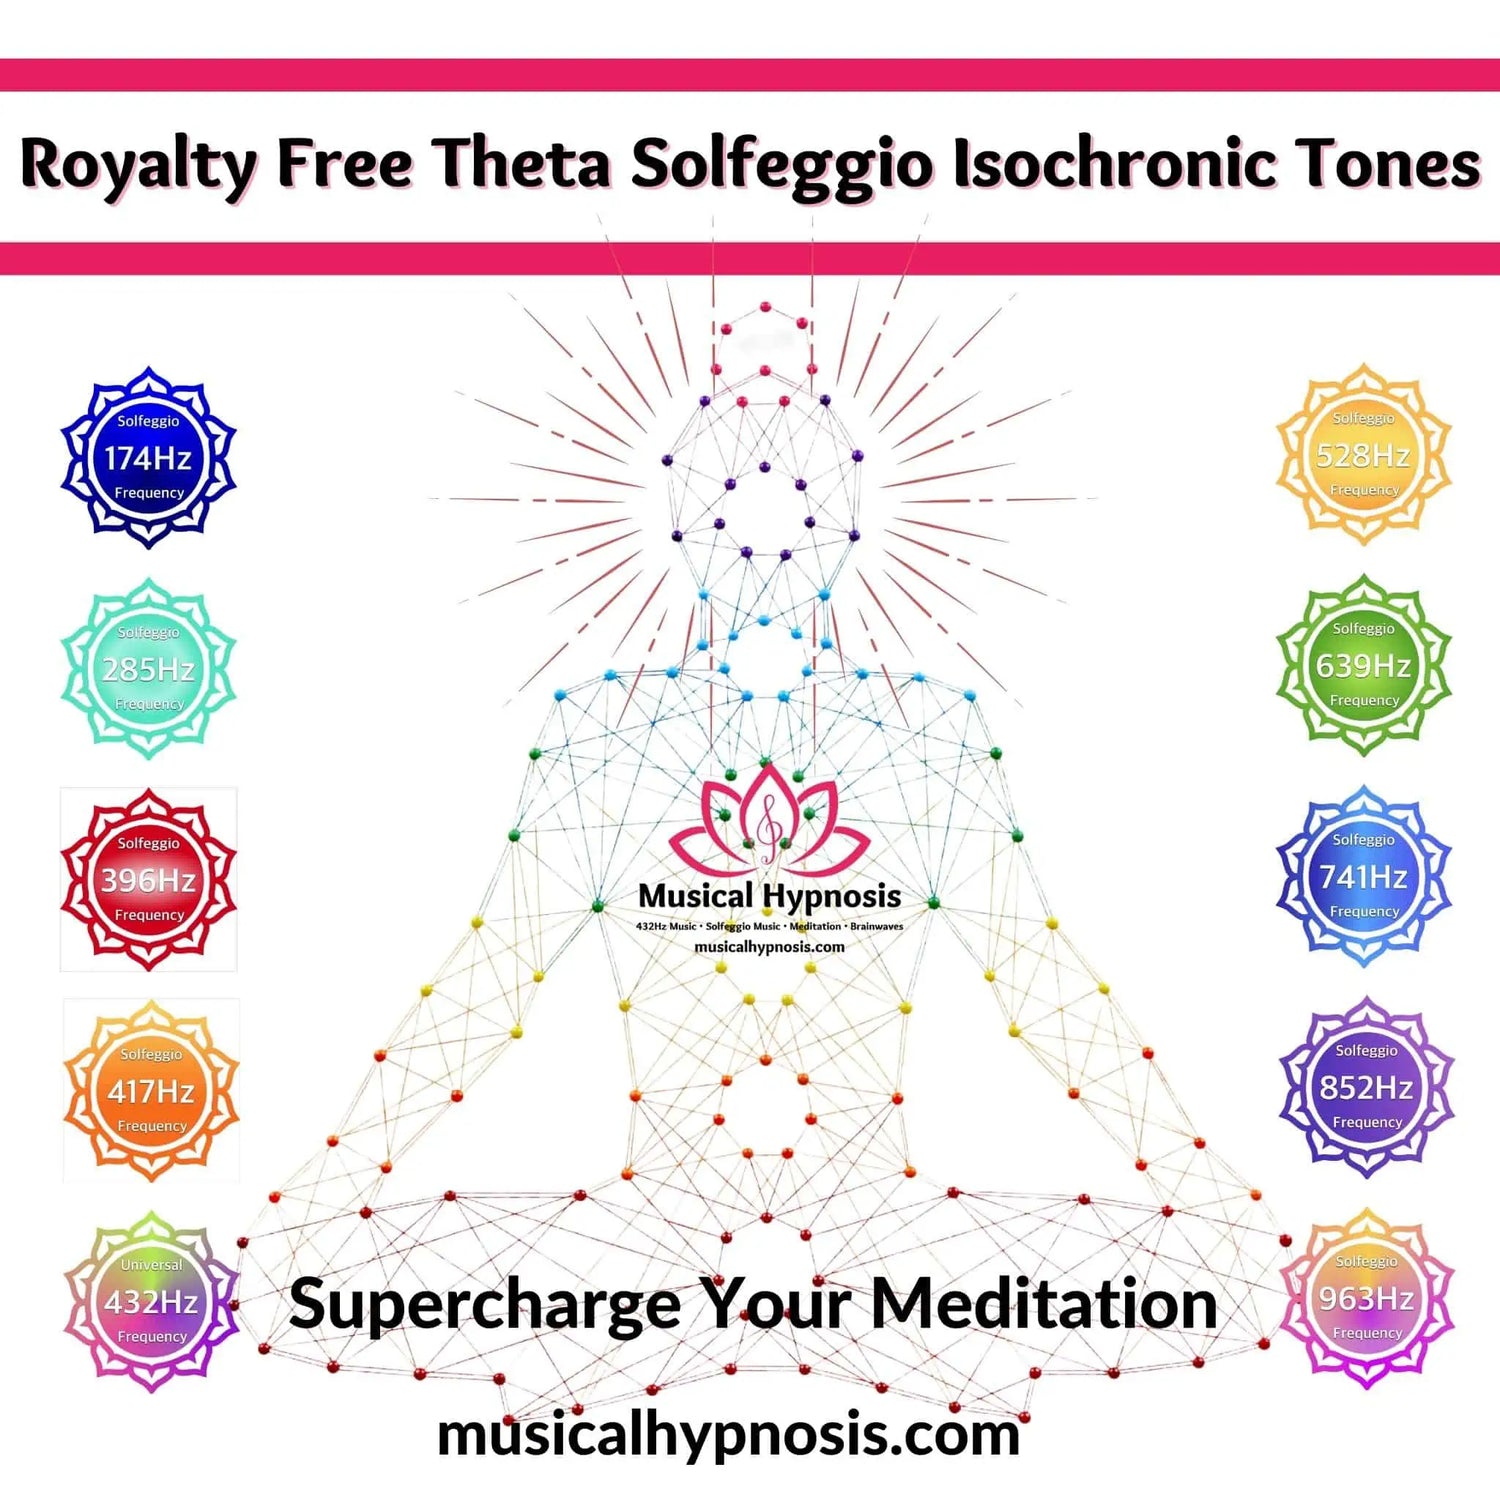 Royalty Free Theta Solfeggio Isochronic Tones Collection